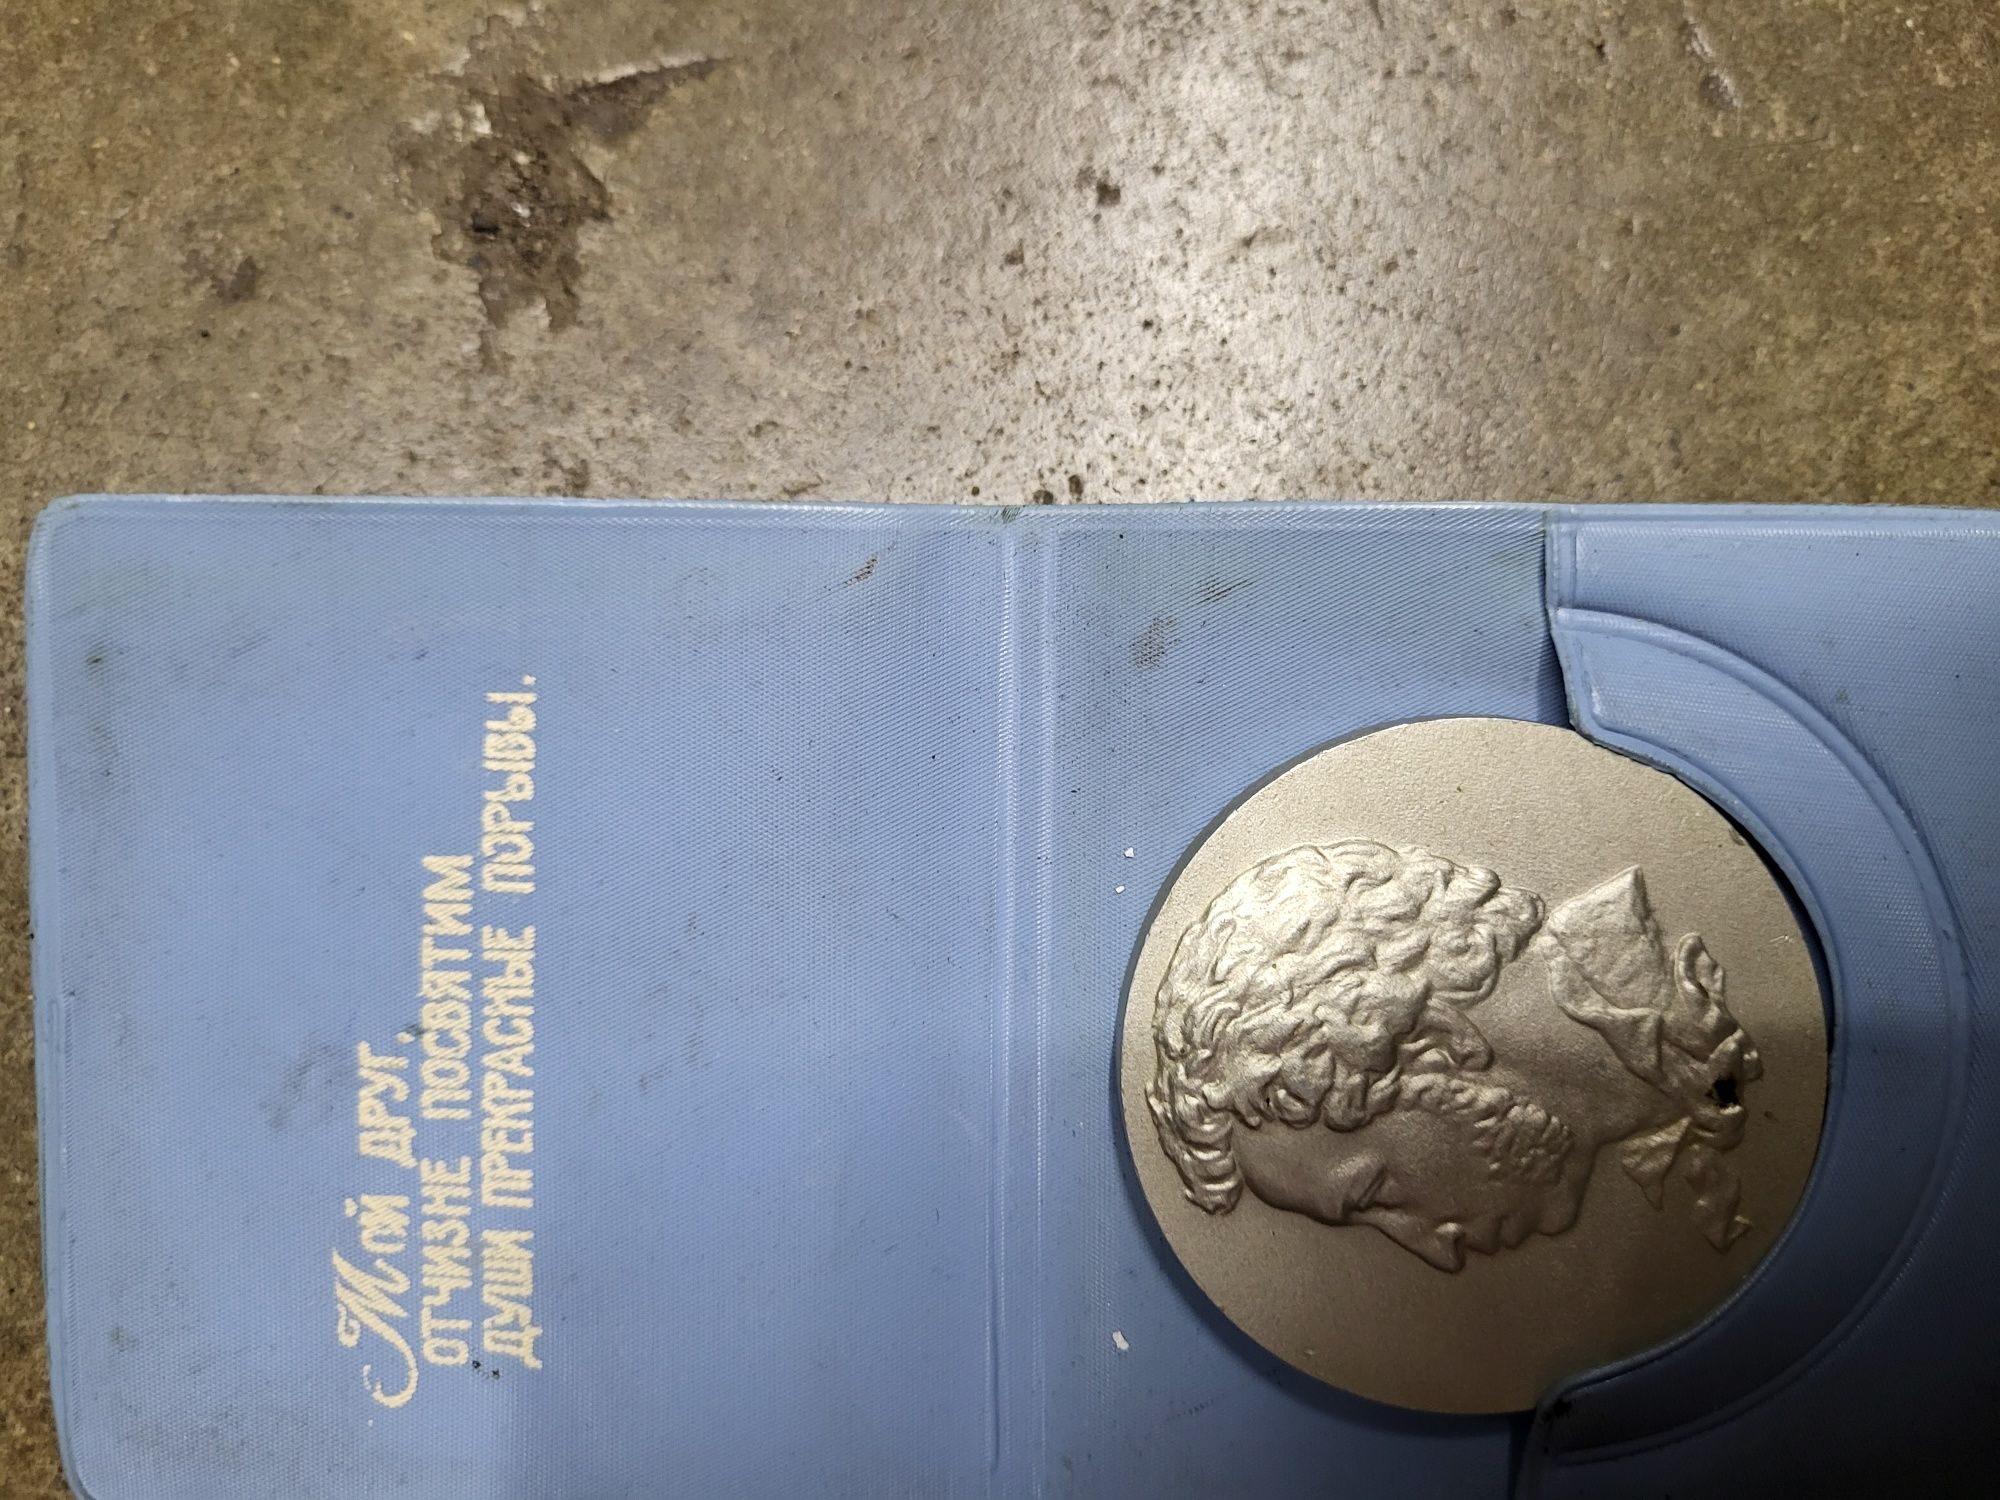 Stary medalion medal radziecki moneta